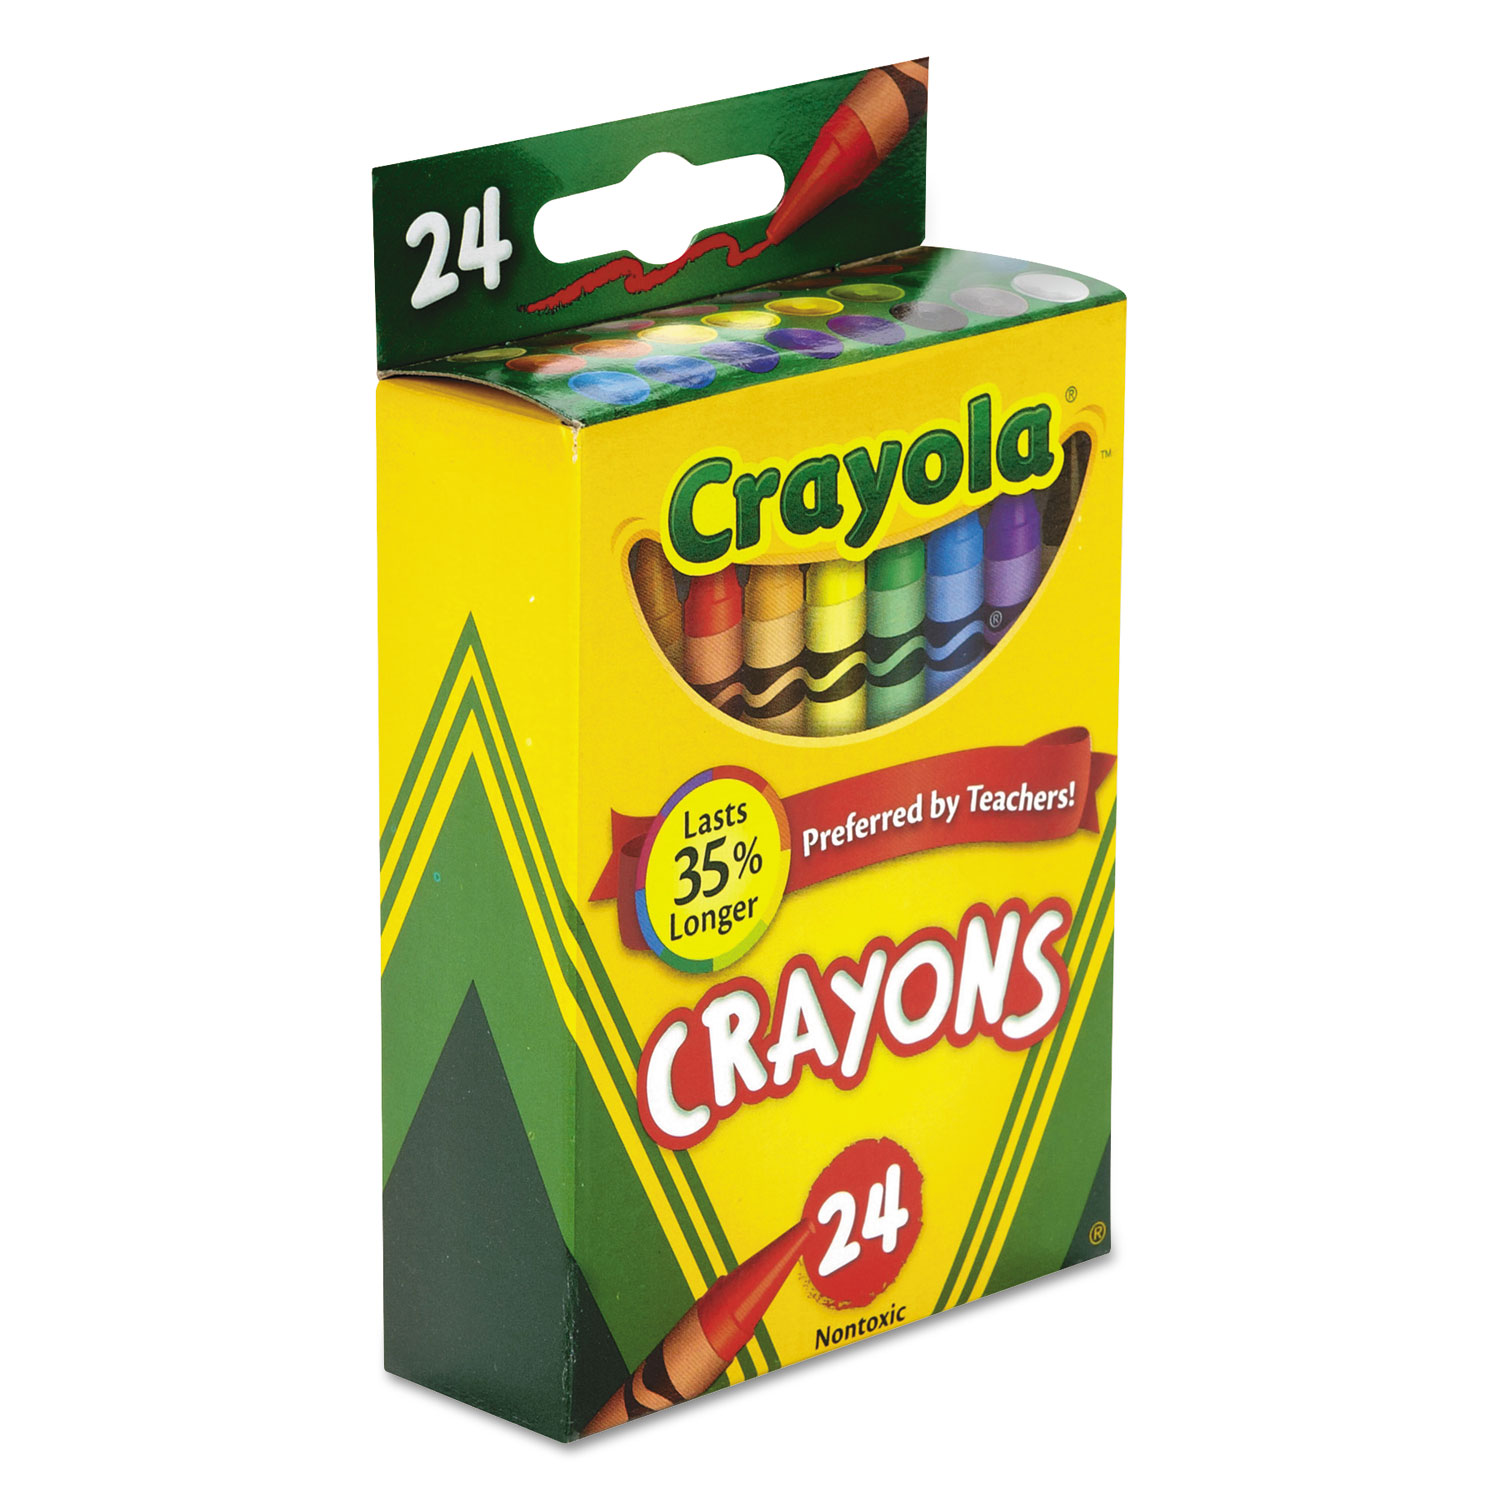 Classic Color Crayons, Peggabl